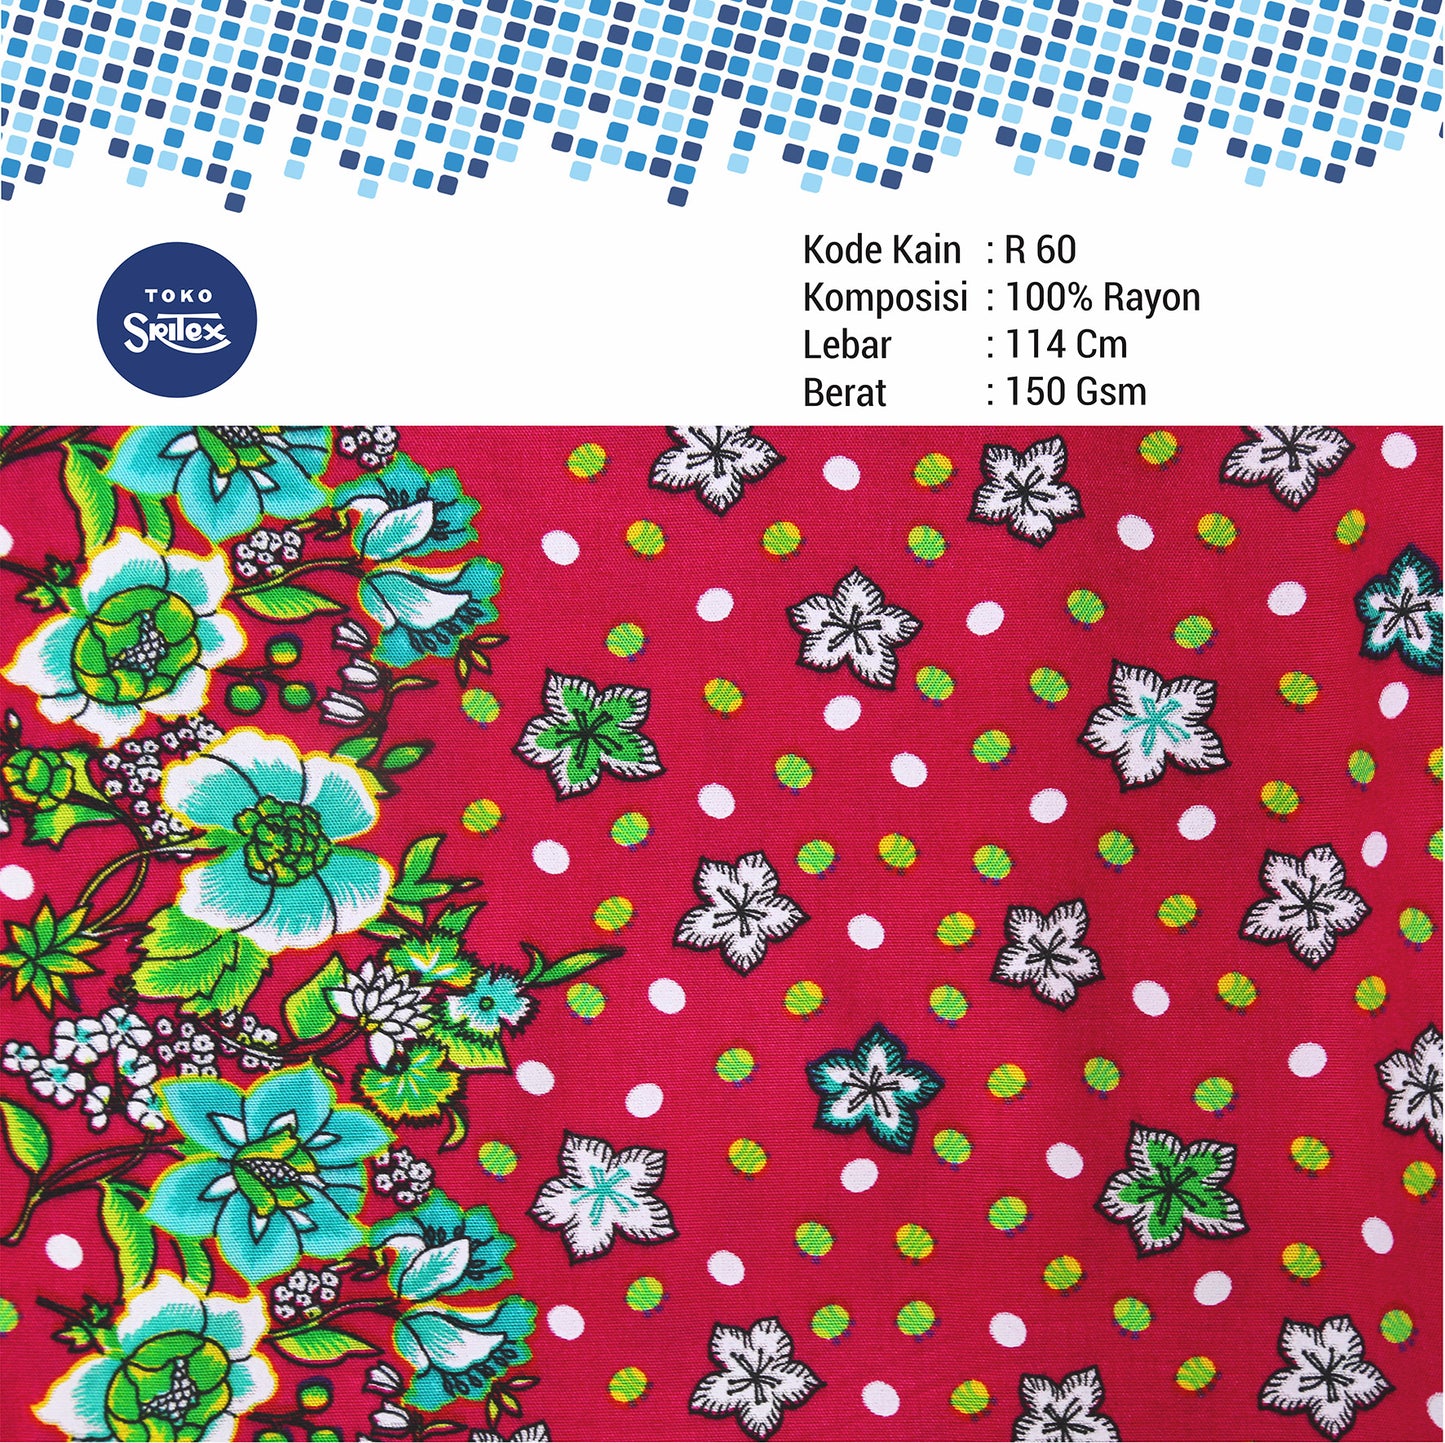 Toko Sritex Kain Rayon Print Bunga Bintang Premium Ekspor, R60. Harga per 45cm, Lebar 114cm.